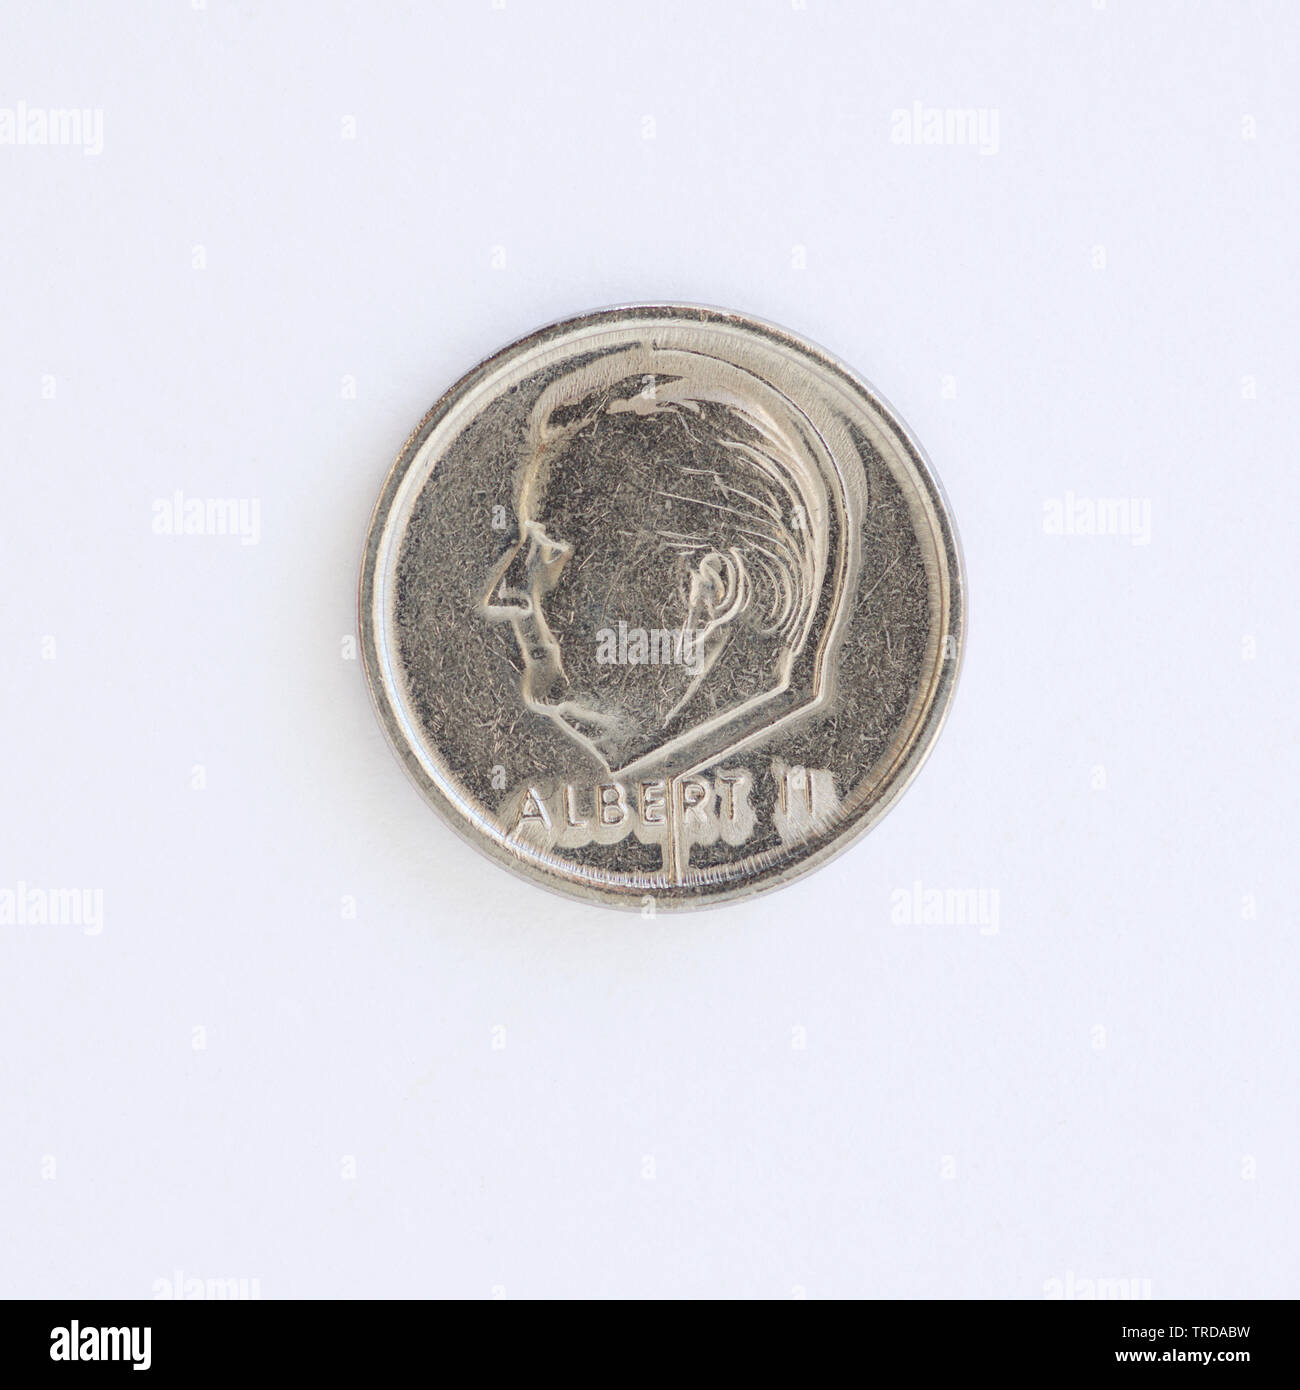 Belgio 1 franco - Albert II Coin - 1995 Foto Stock